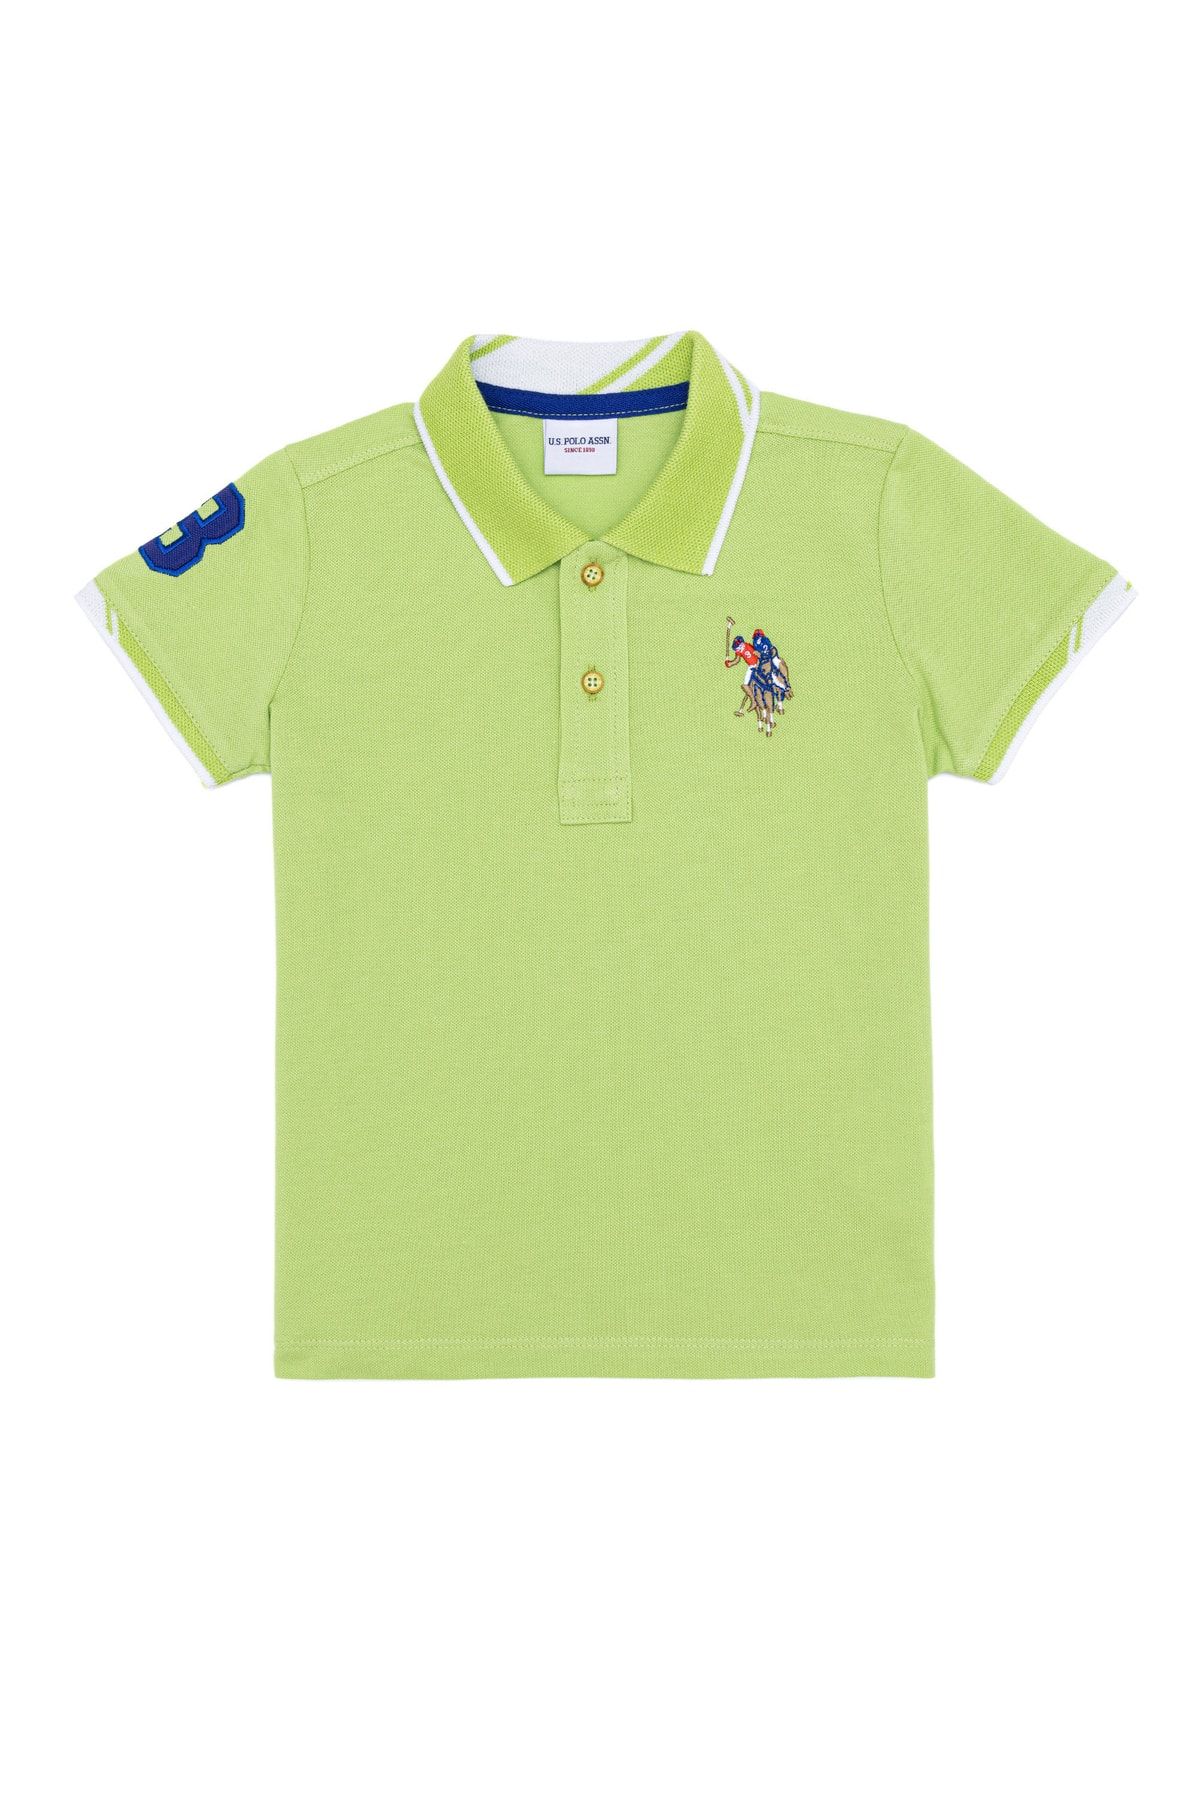 U.S. Polo Assn. Yeşil Erkek Çocuk T-Shirt